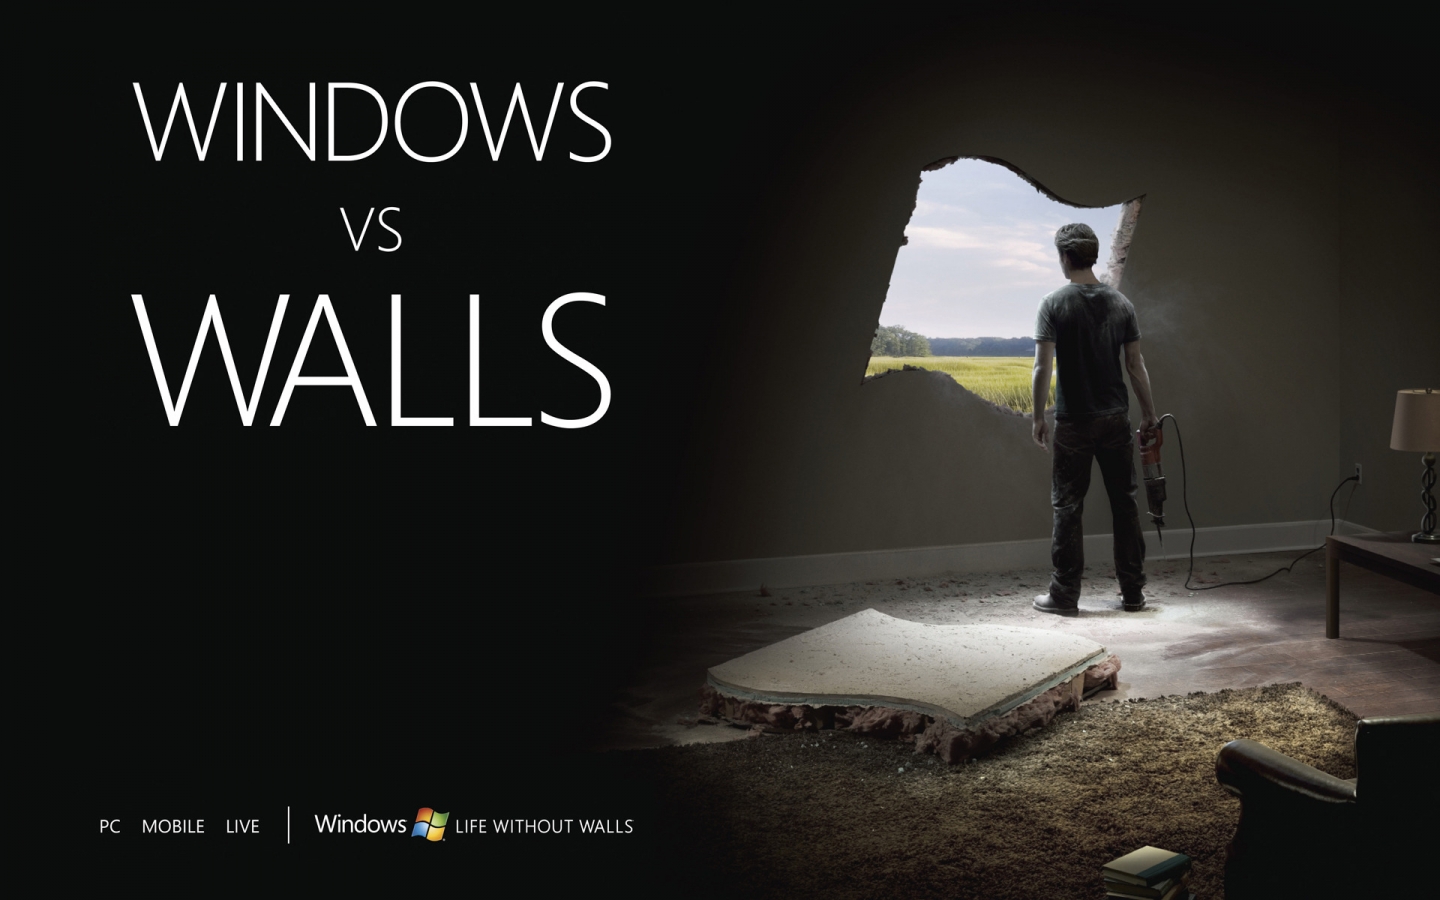 Windows vs Walls for 1440 x 900 widescreen resolution